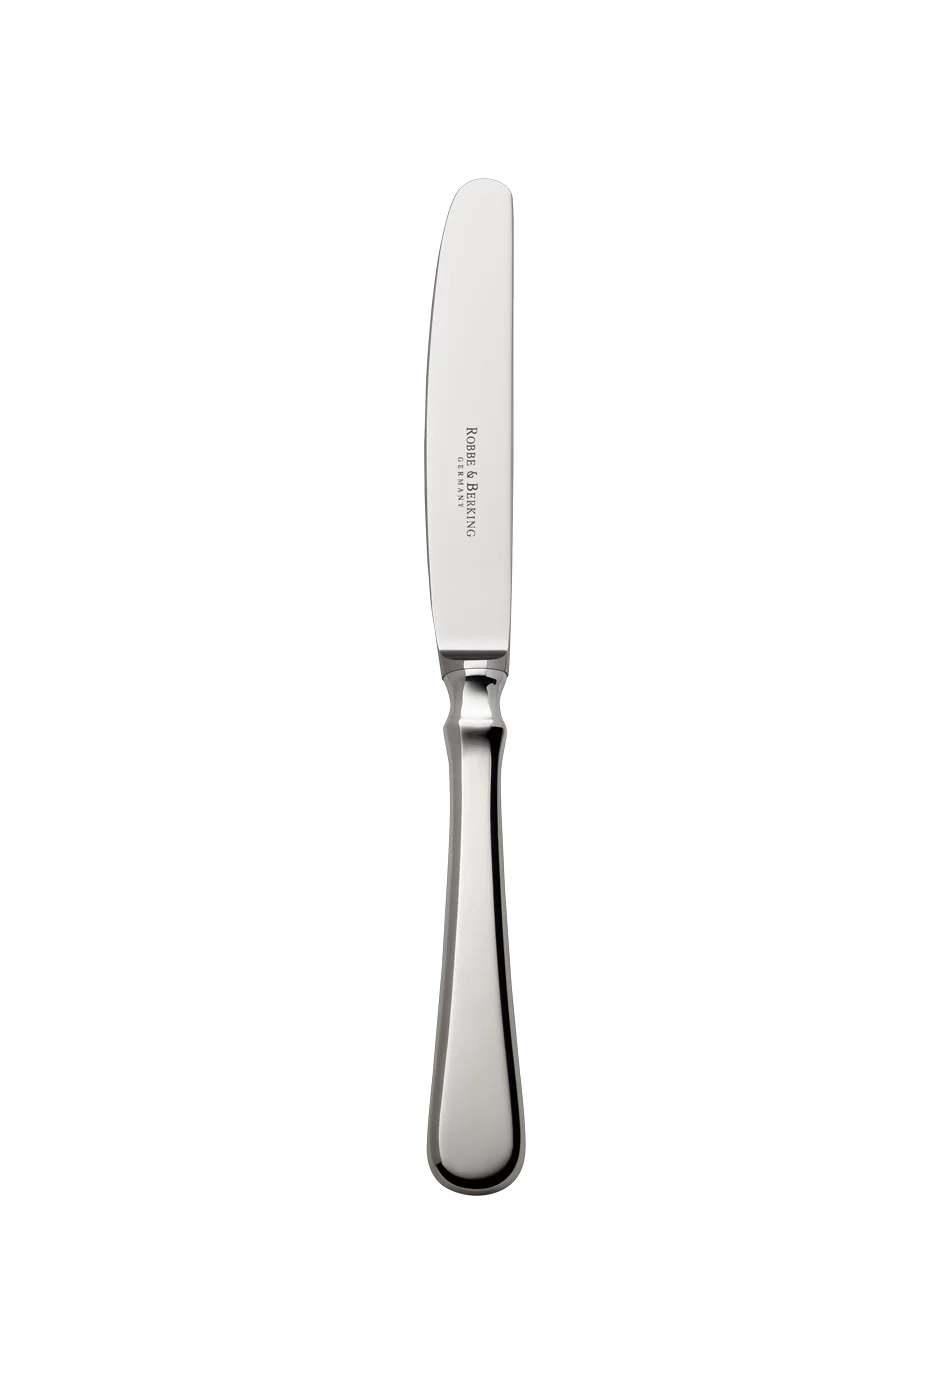 Spaten Menu Knife (150g massive silverplated)